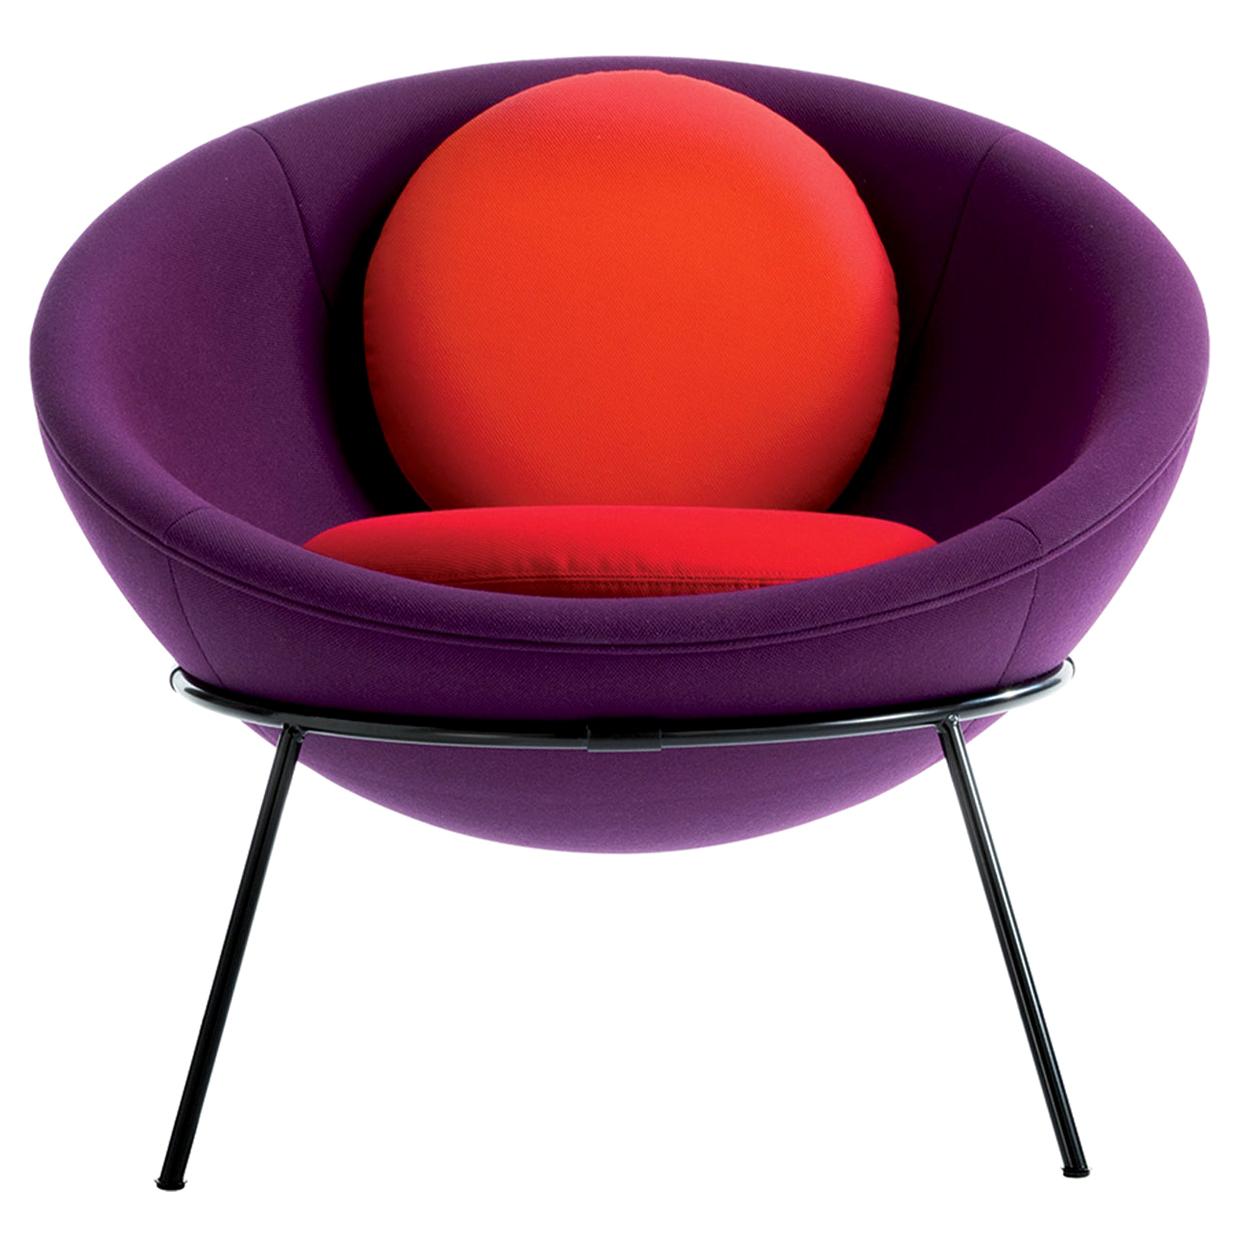 Bardi's Bowl Chair Purple Nuance